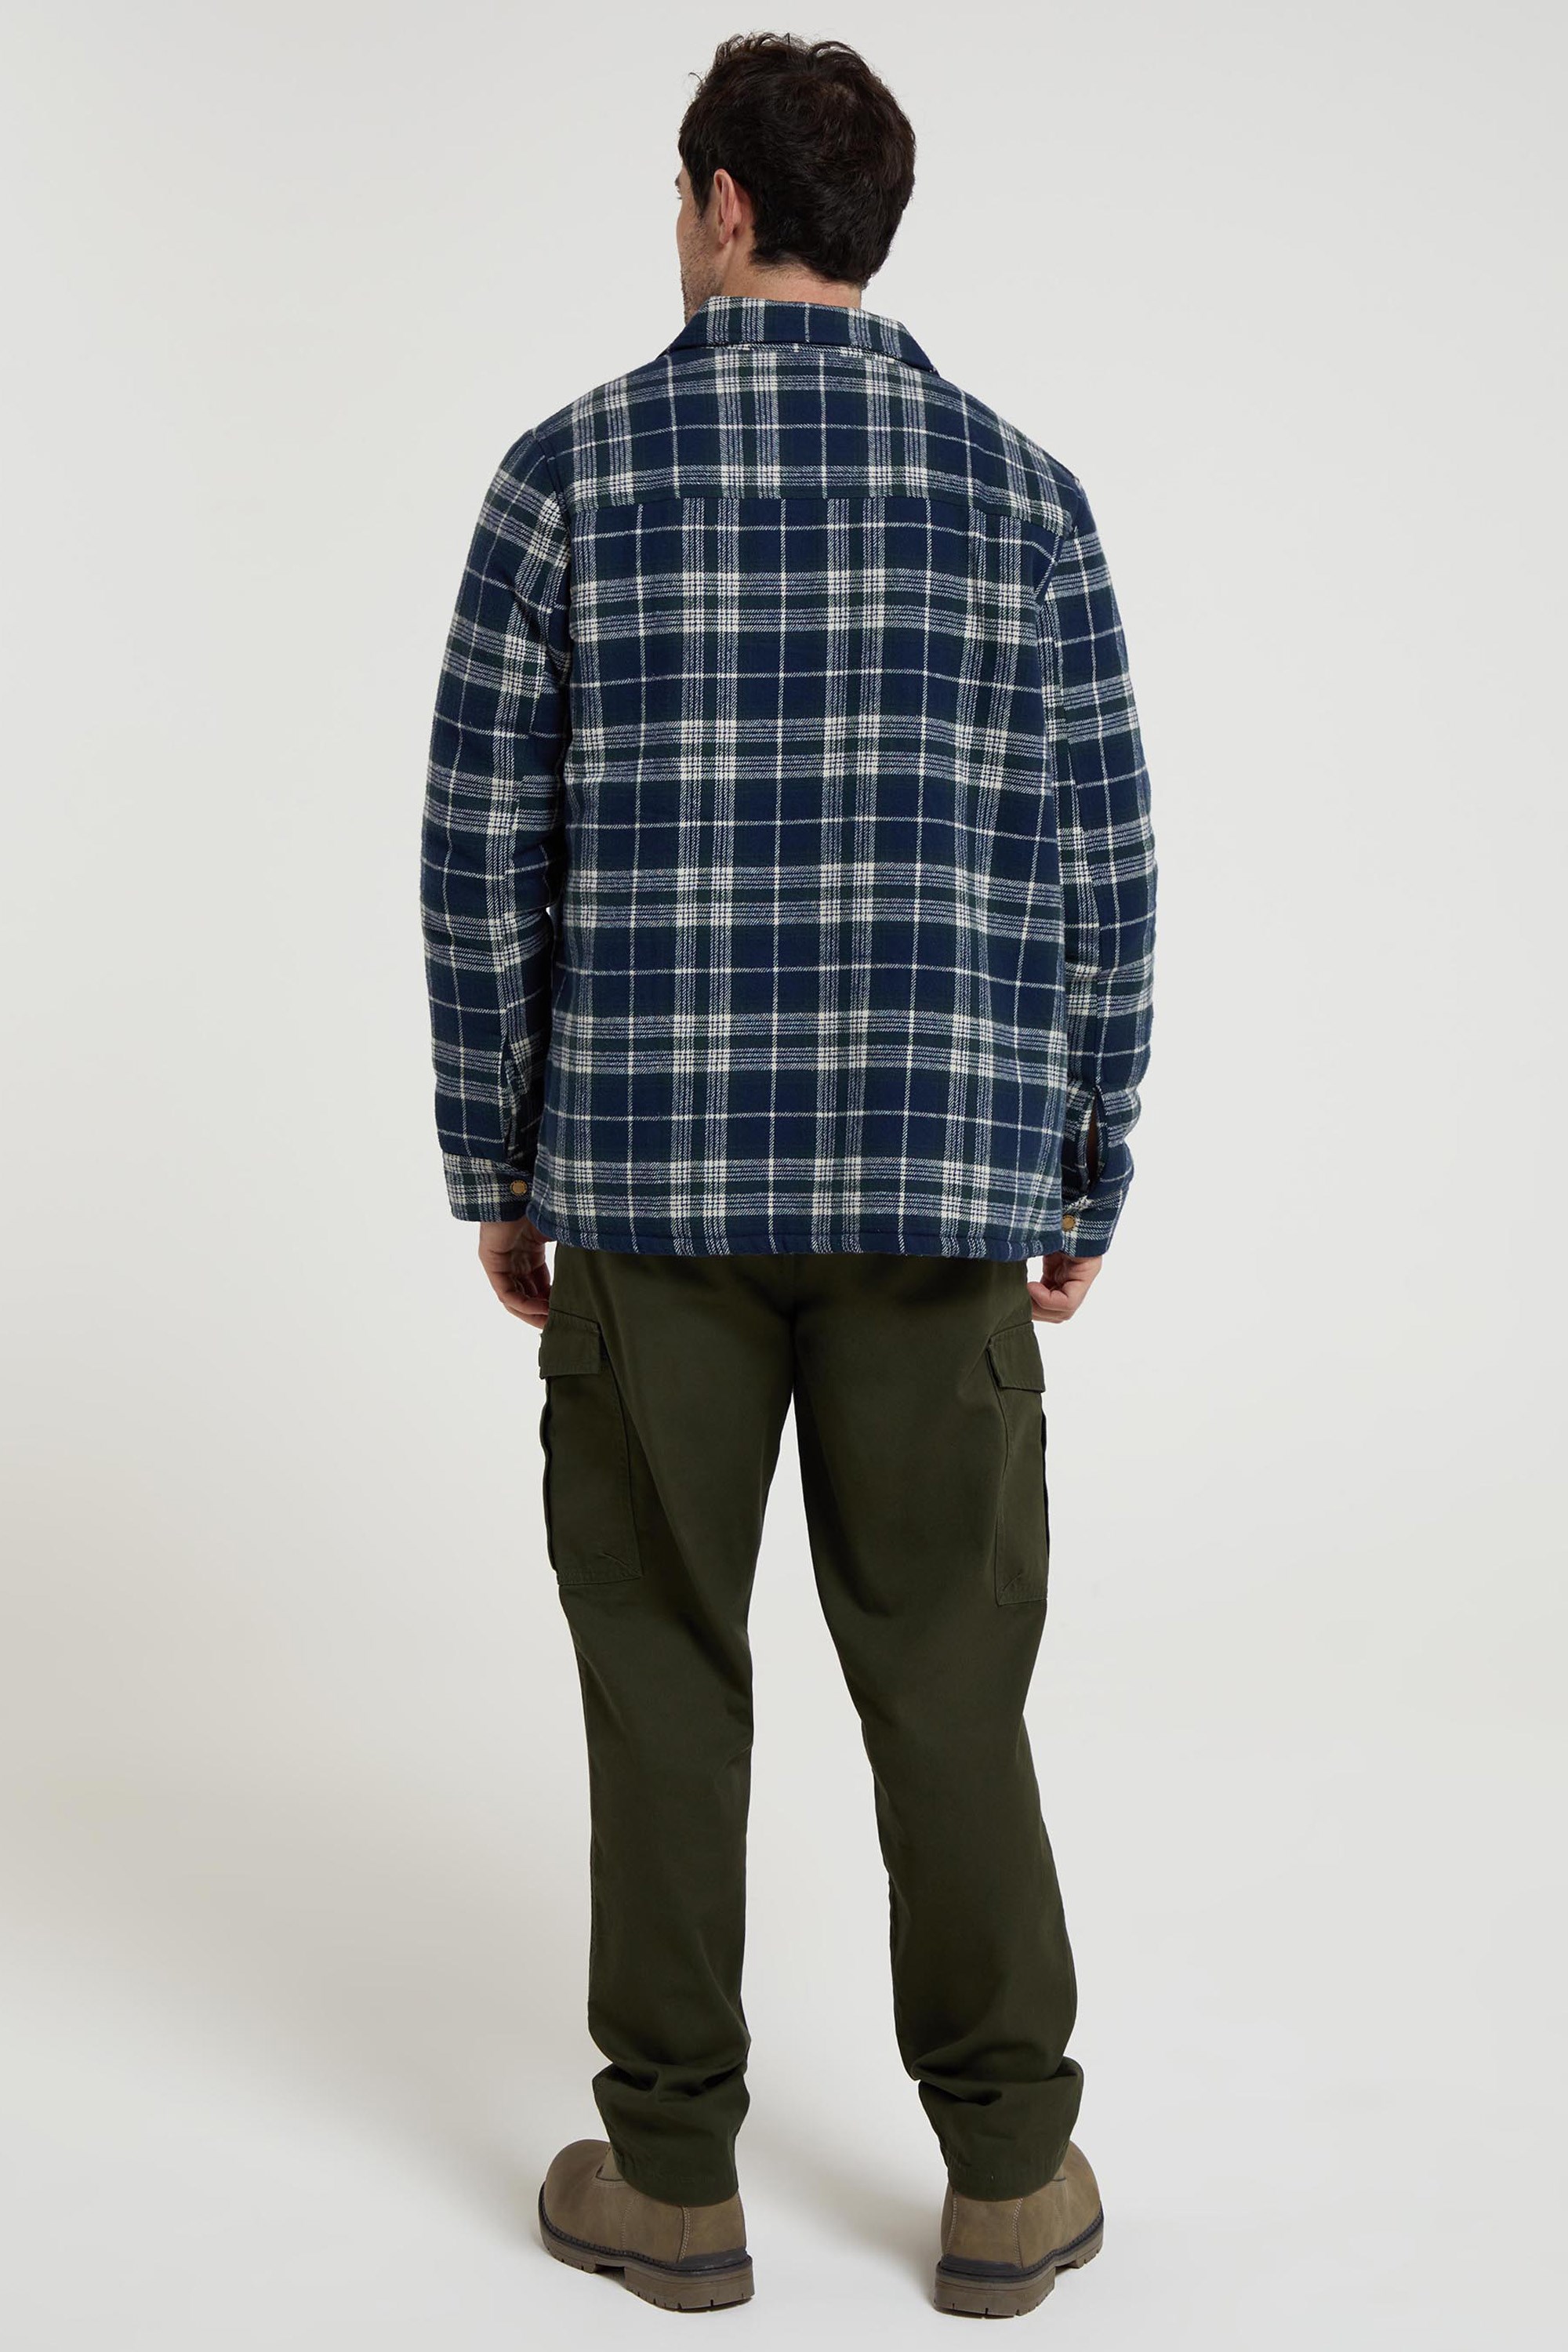 Pinn Mens Sherpa Lined Flannel Shirt